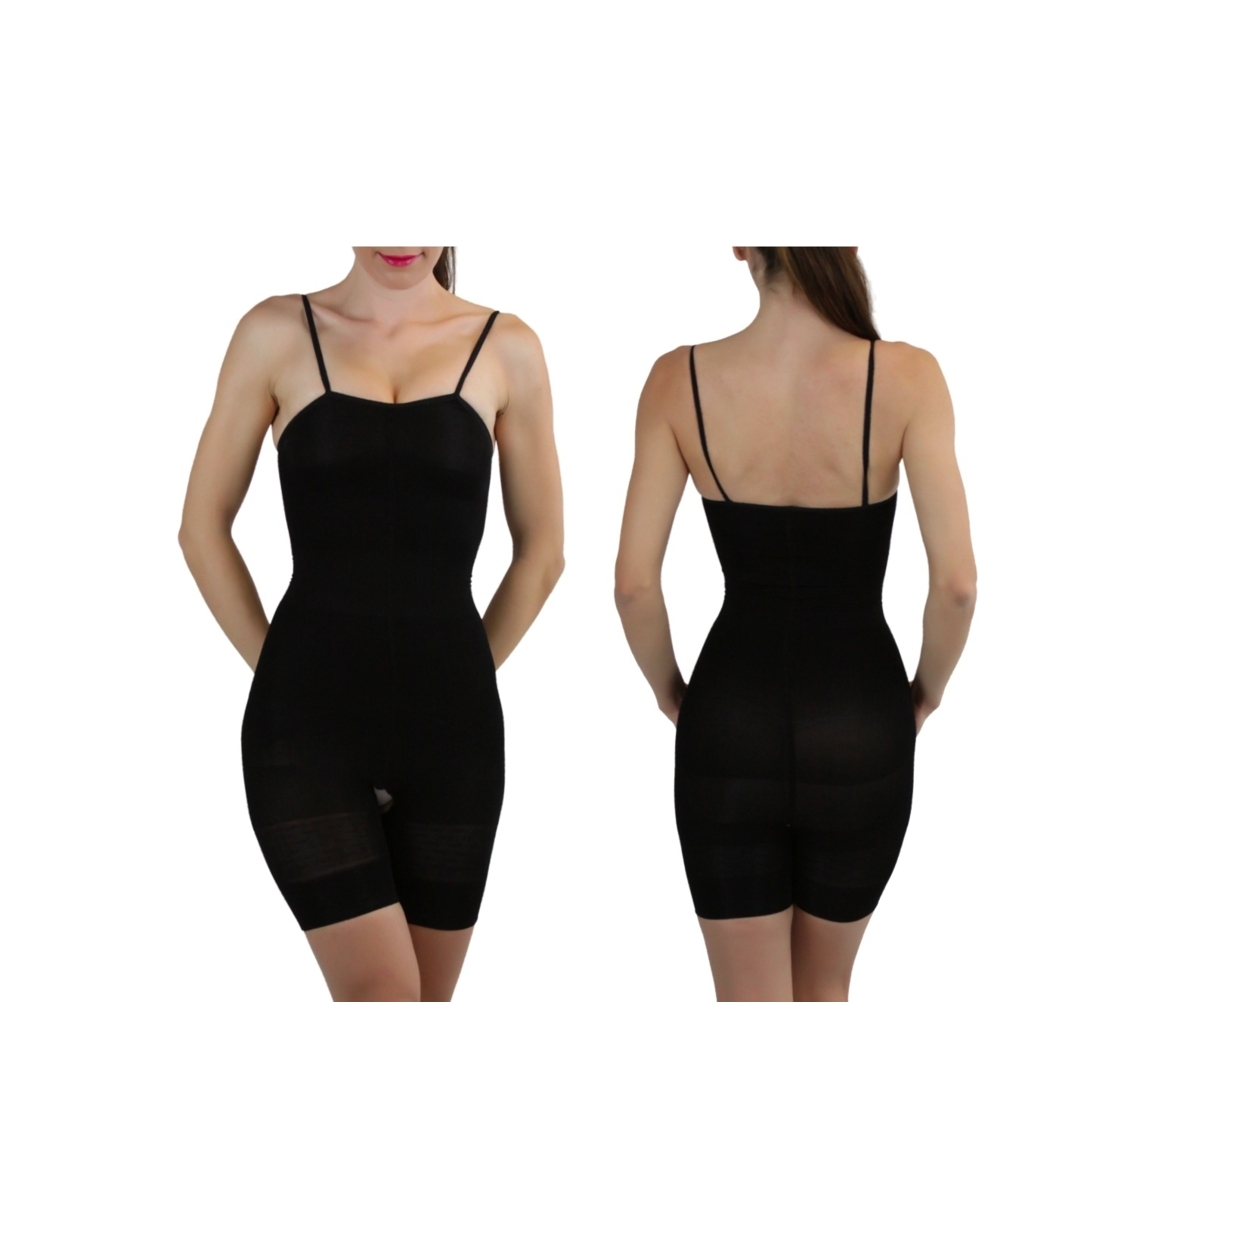 Women's Slimming Body Suit - Black, XL